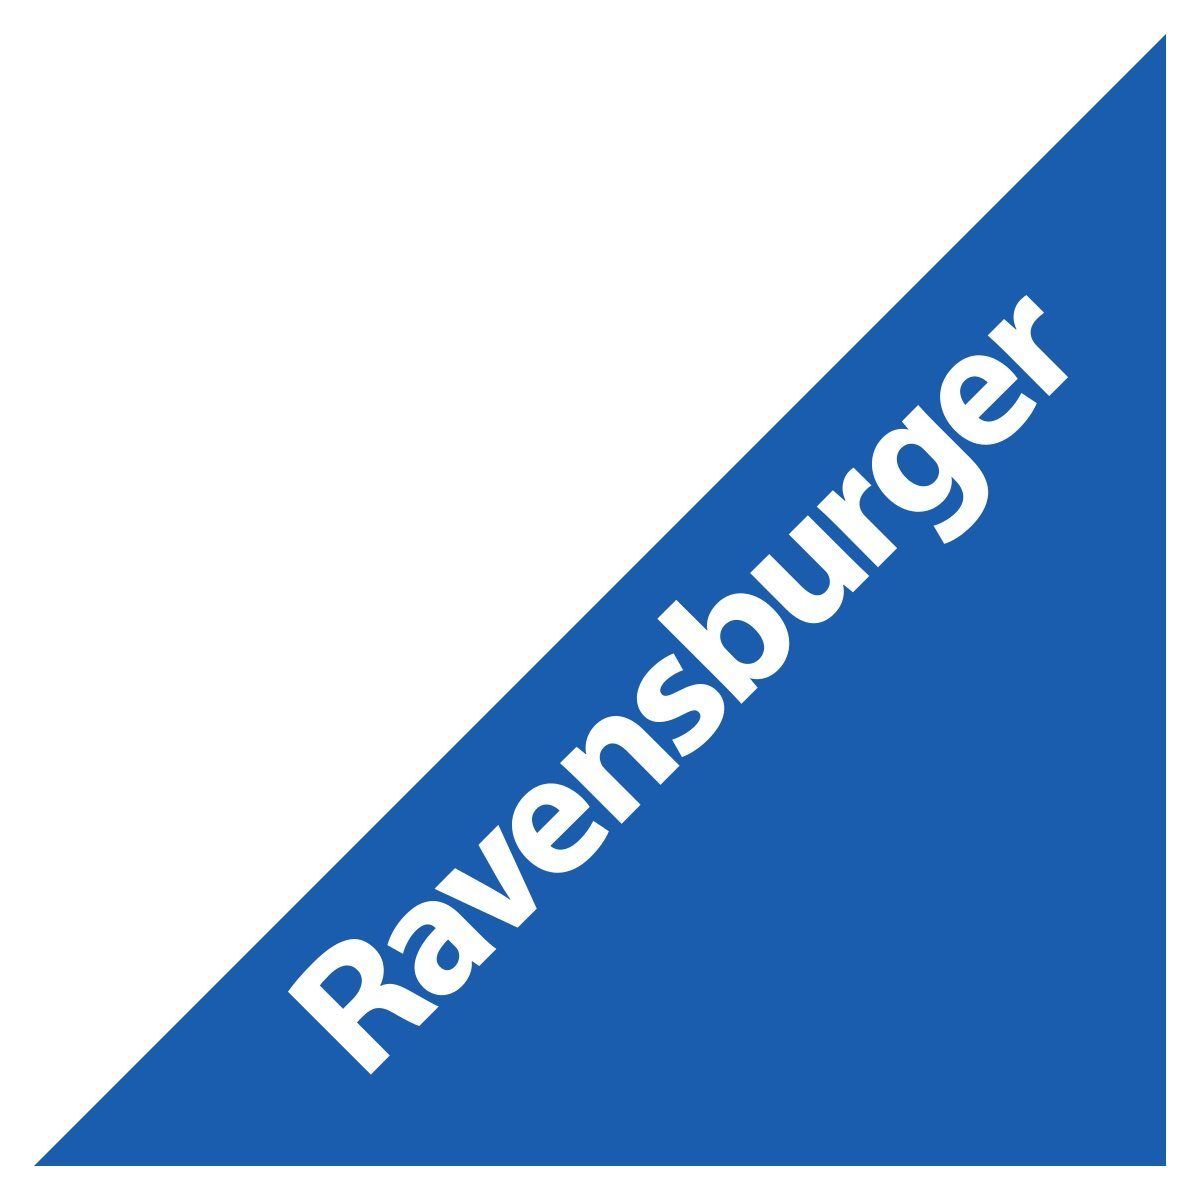 Ravensburger Verlag GmbH